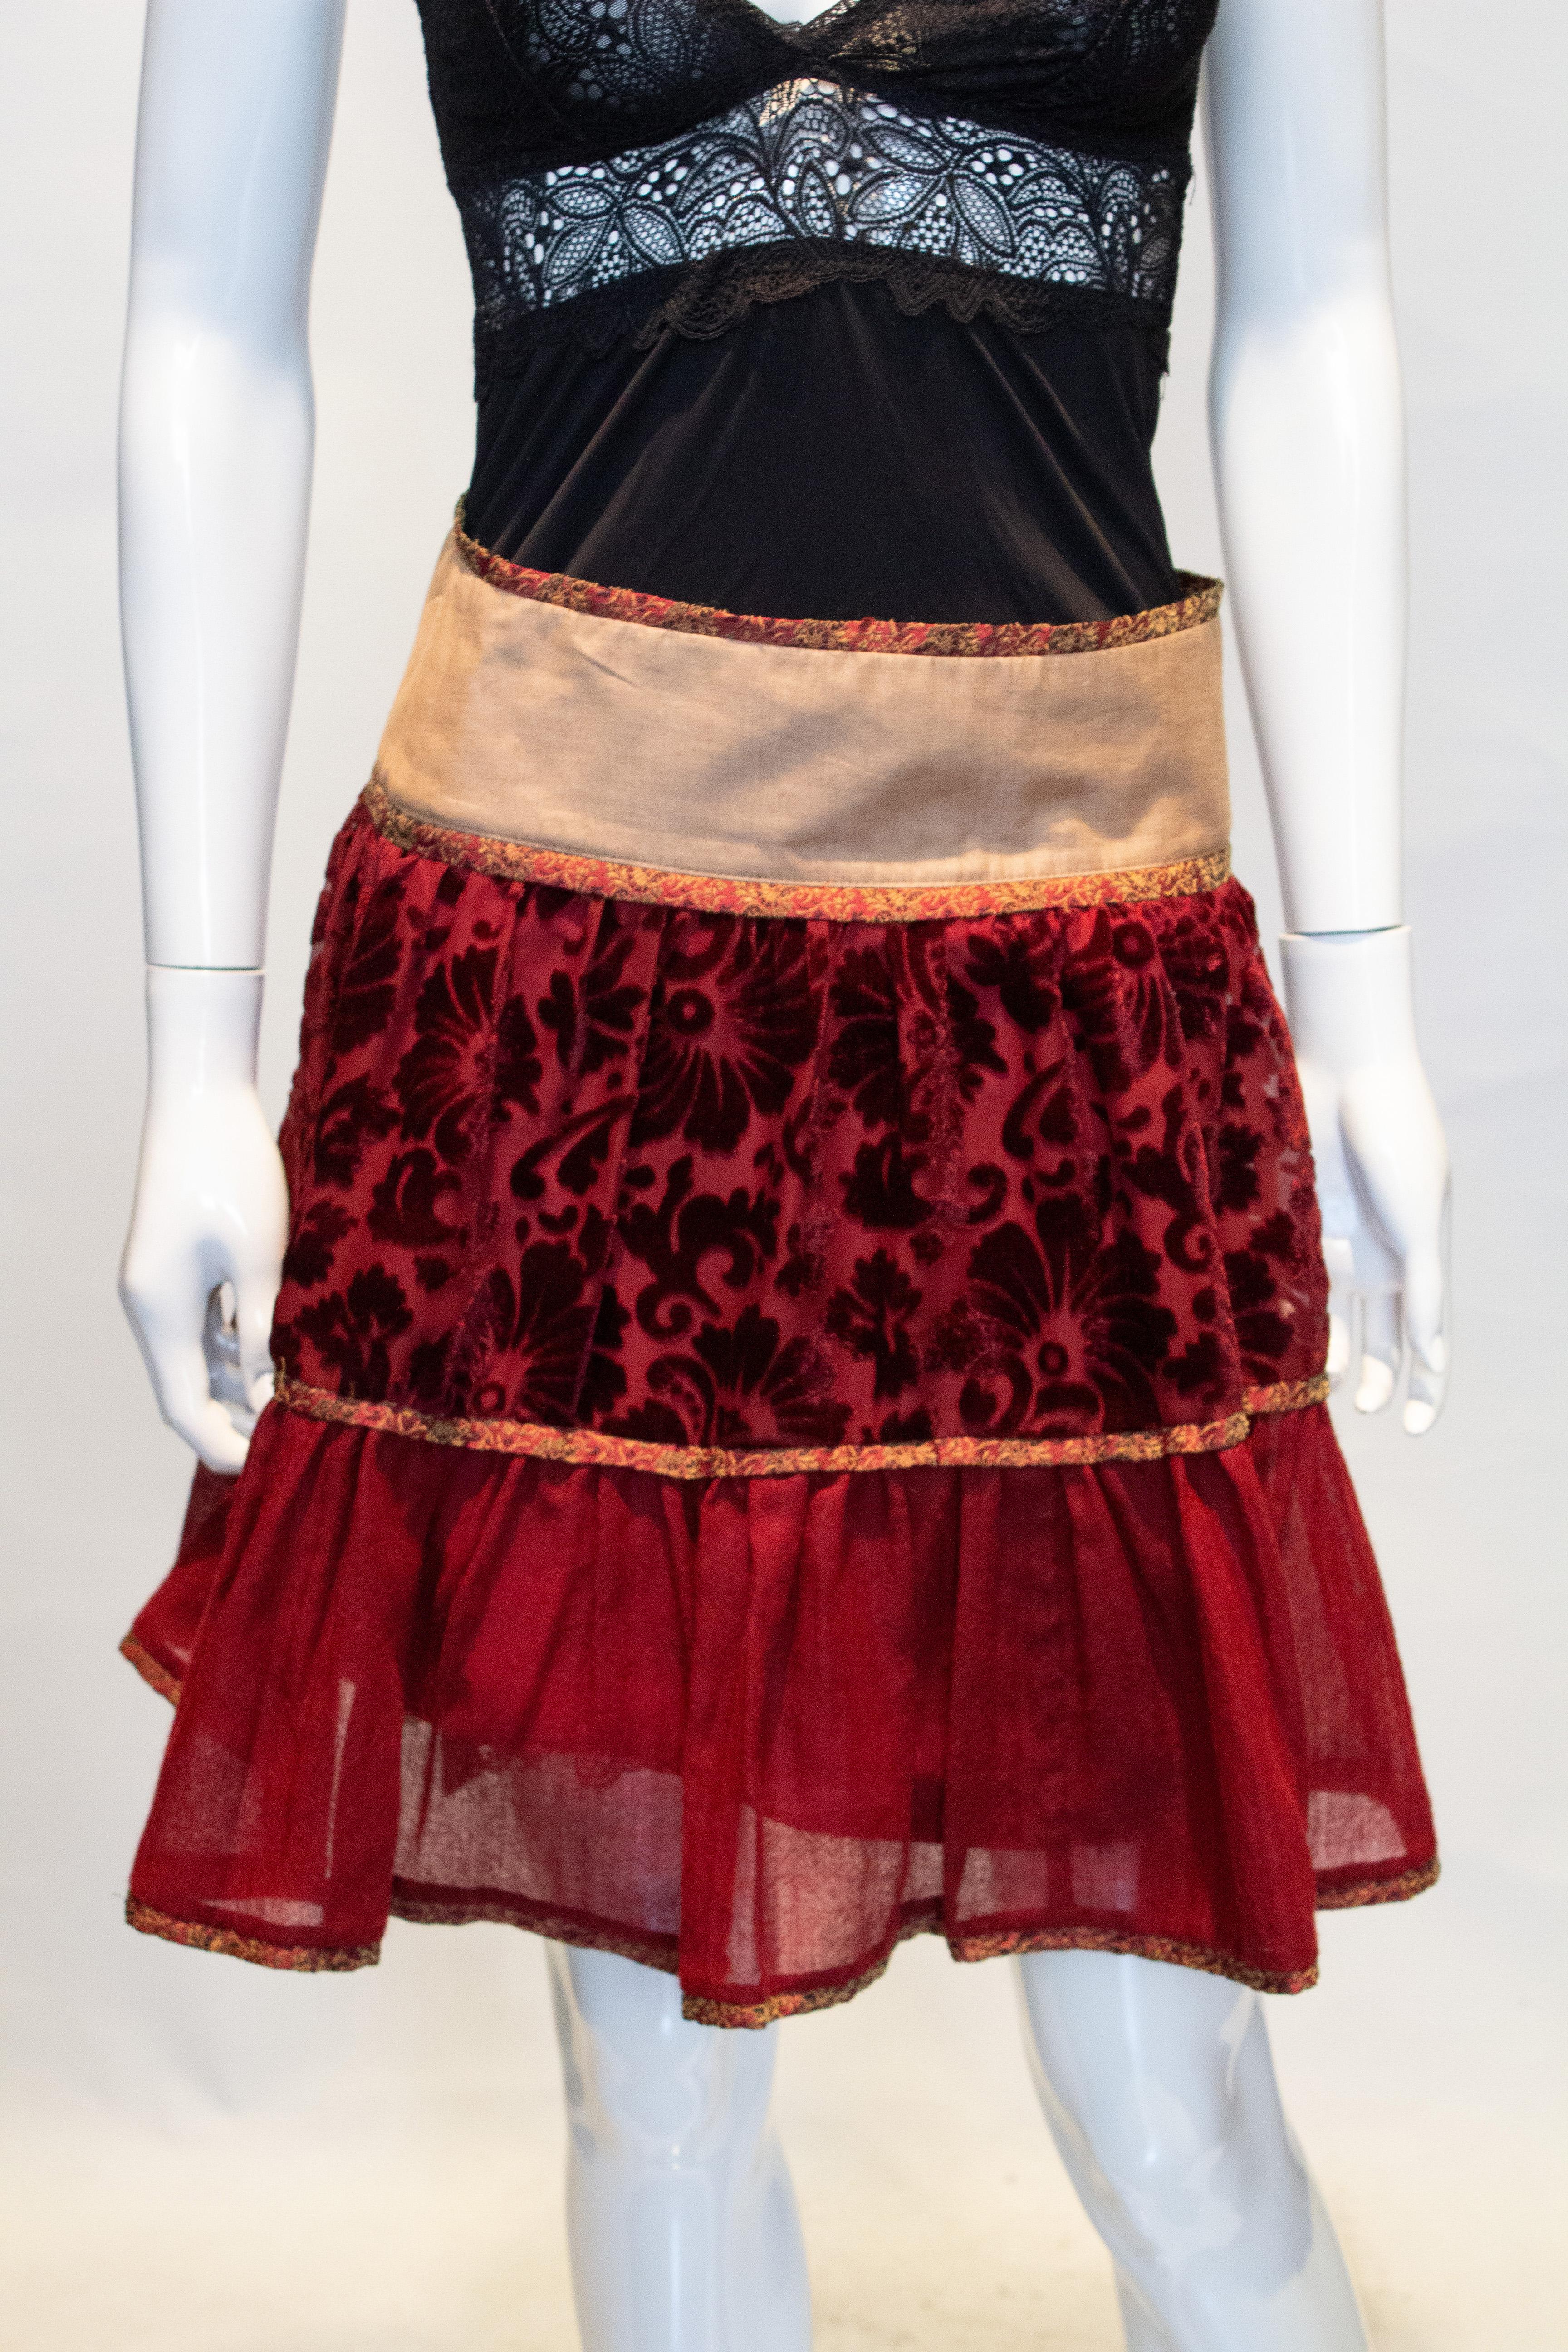 Women's Alberta Ferretti Skirt in Plum Colours For Sale